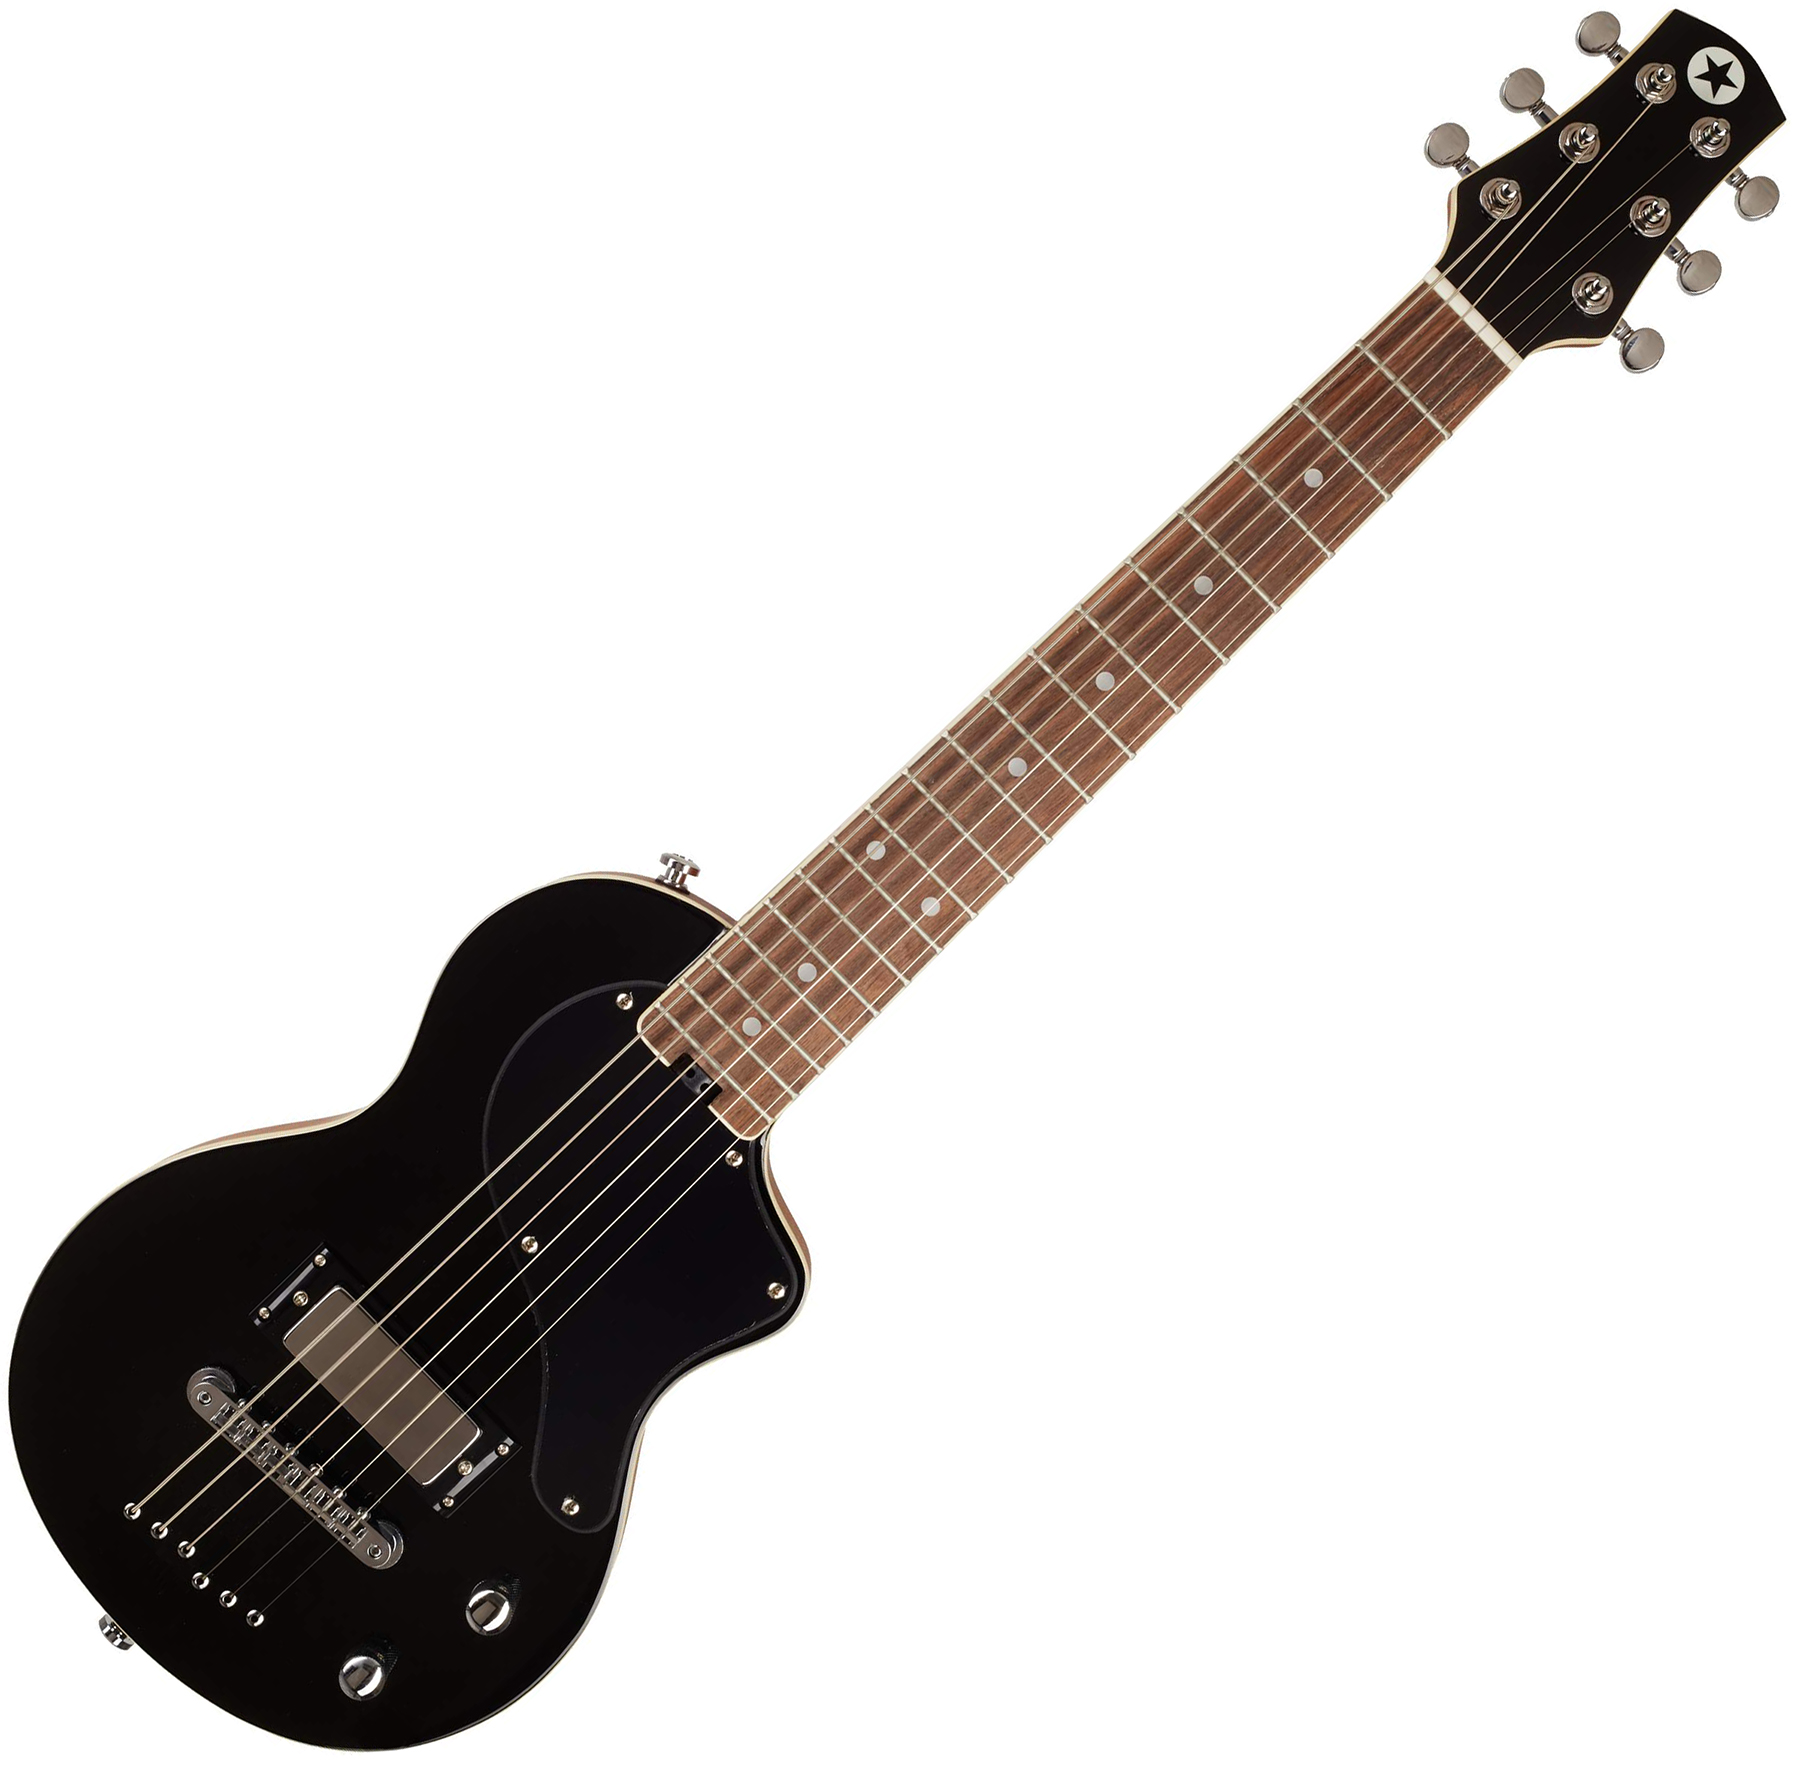 Blackstar Carry-on Travel Guitar Deluxe Pack +fly 3 Bluetooth +housse - Jet Black - Electric guitar set - Variation 1